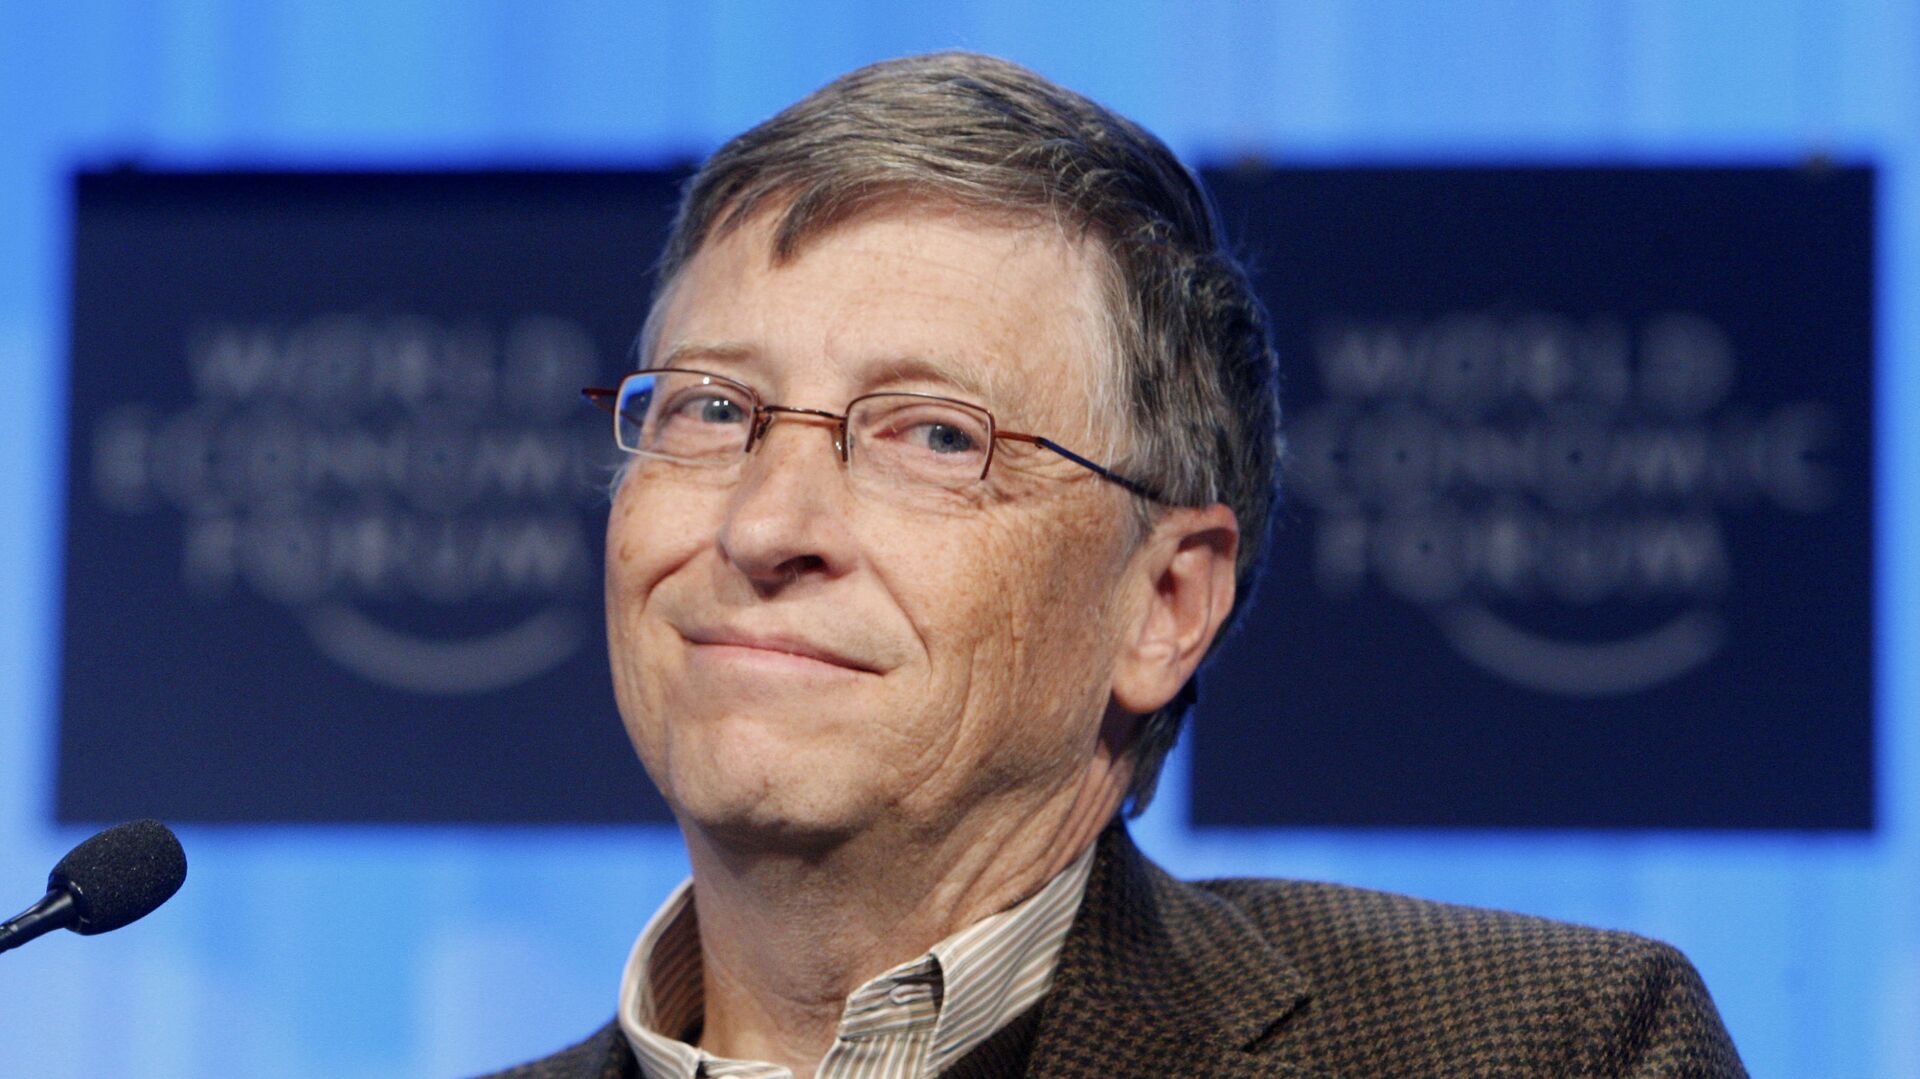 Microsoft founder Bill Gates looks on during a panel discussion on Meeting the Millennium Development Goals, at the World Economic Forum in Davos, Switzerland, Friday, Jan. 29, 2010 - Sputnik International, 1920, 29.04.2021